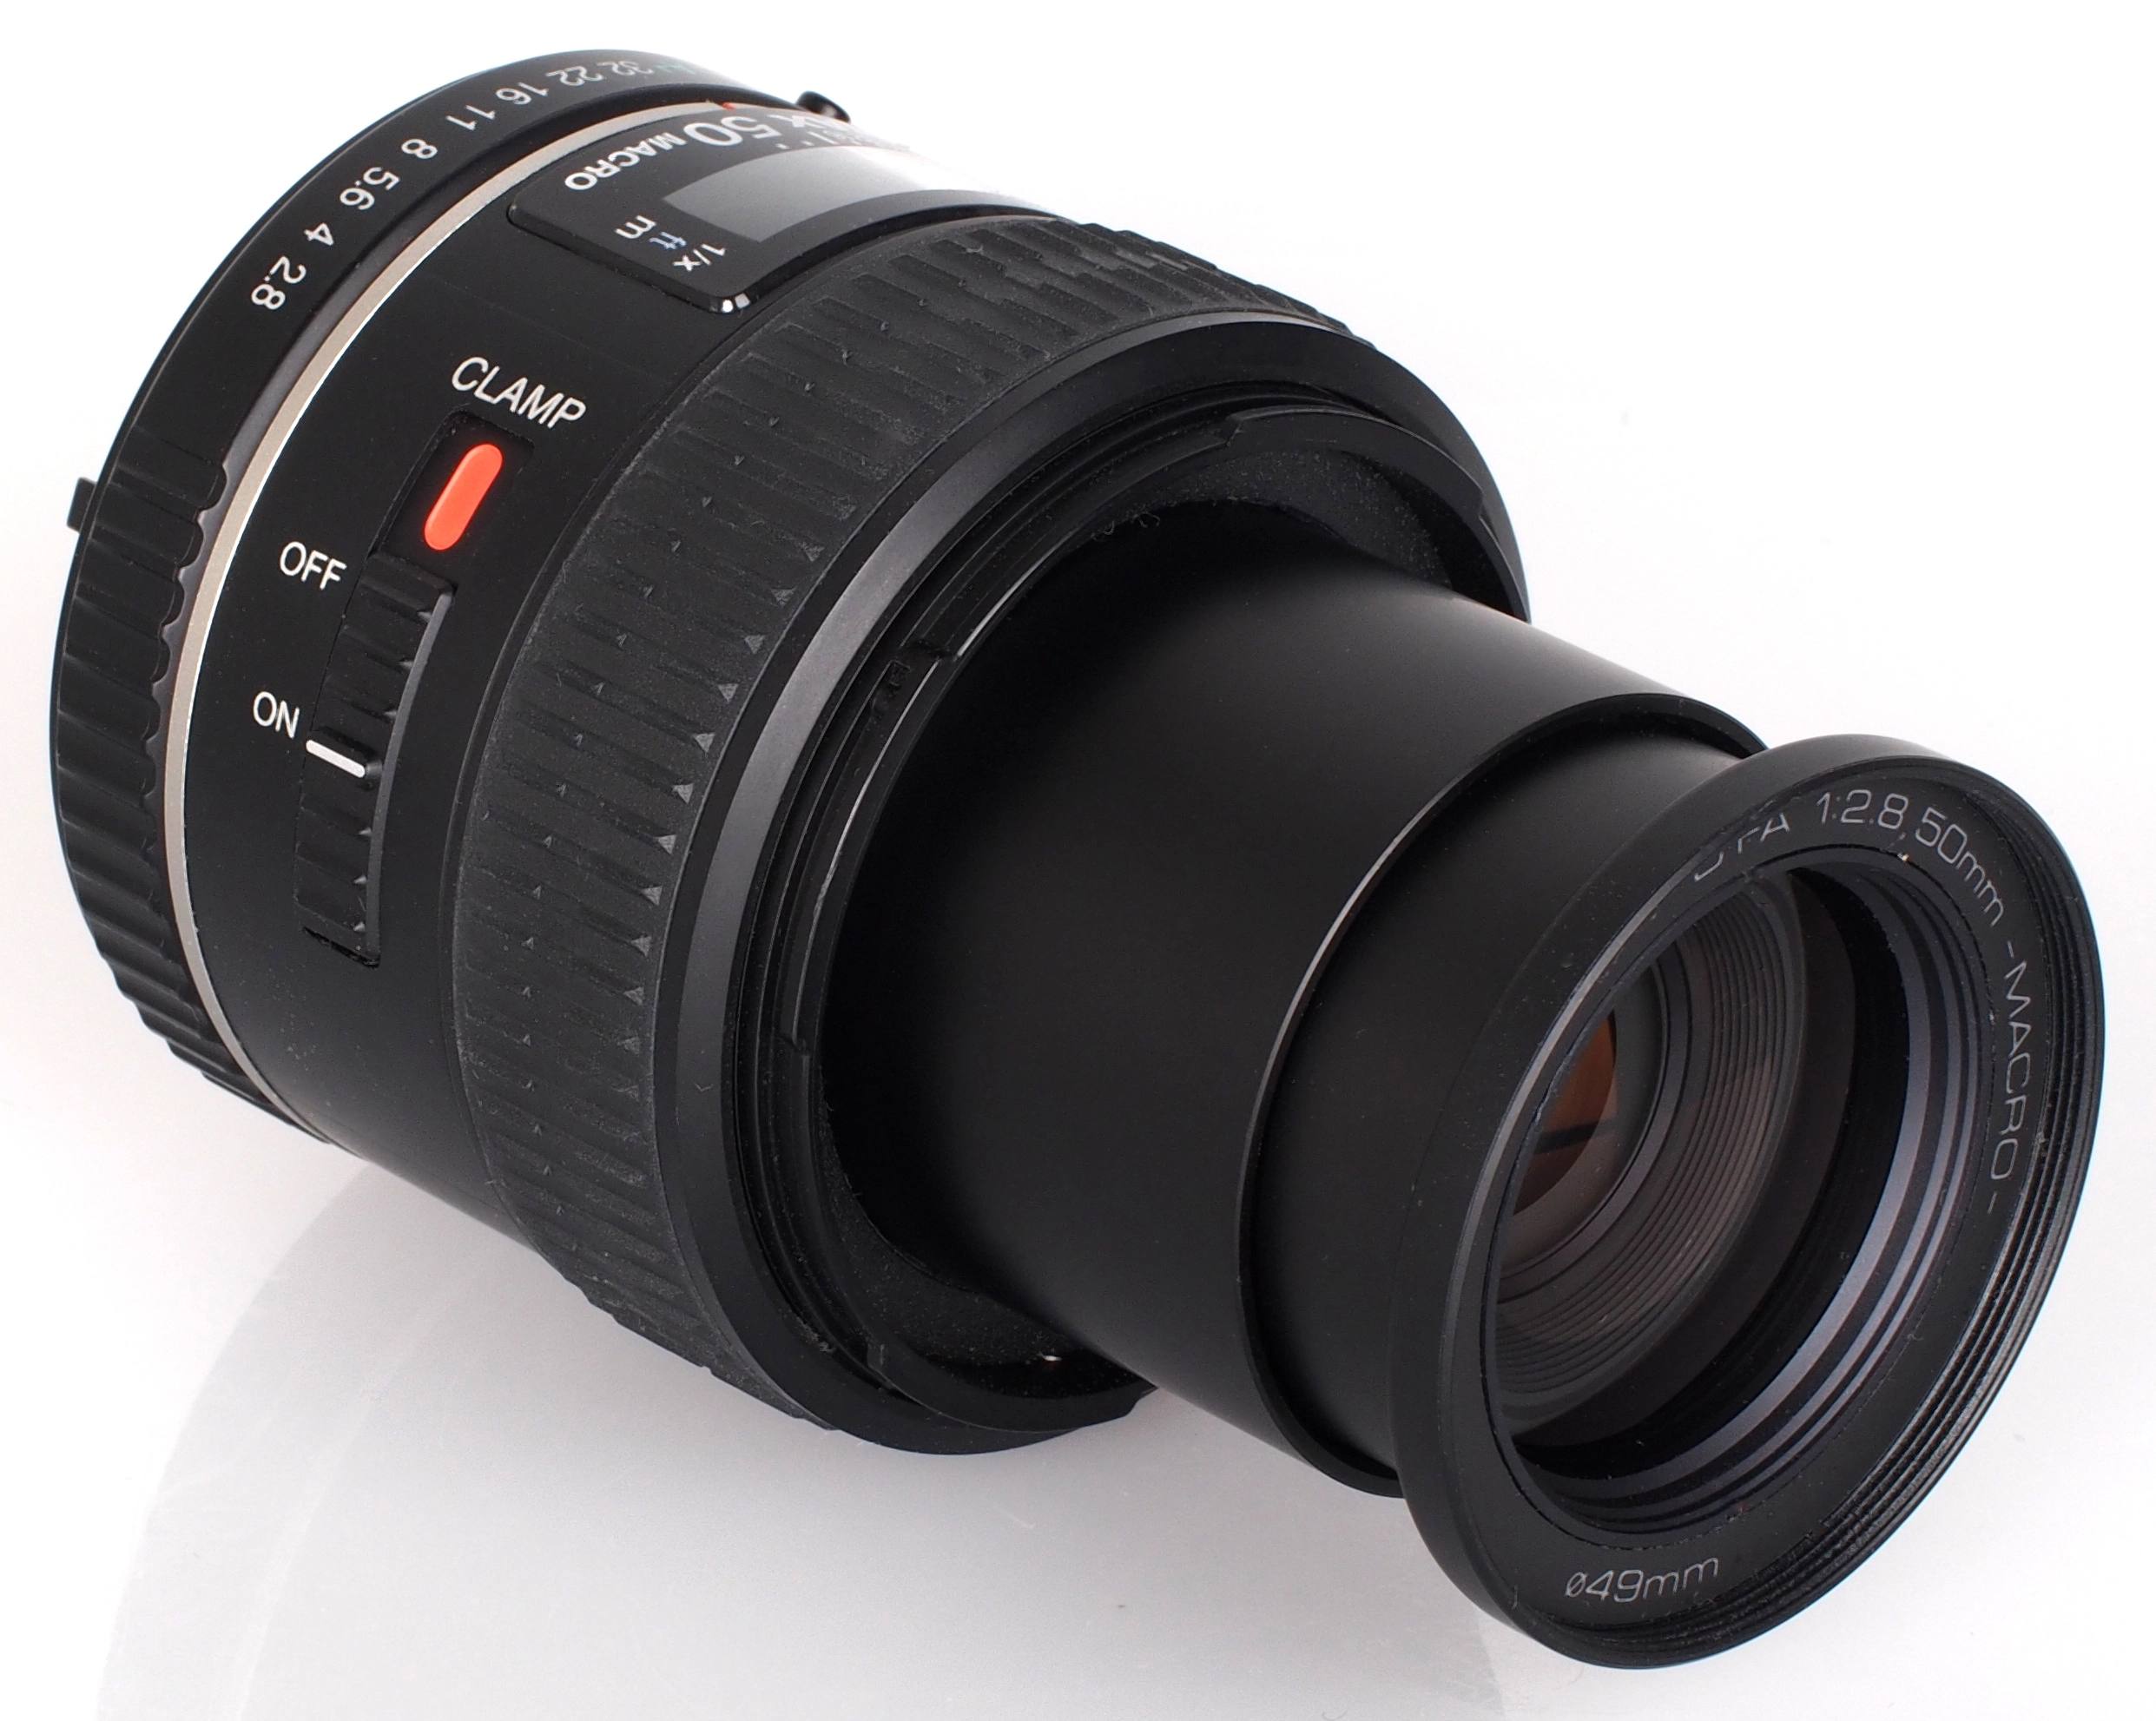 Pentax 50mm F2.8 D FA SMC Macro Lens